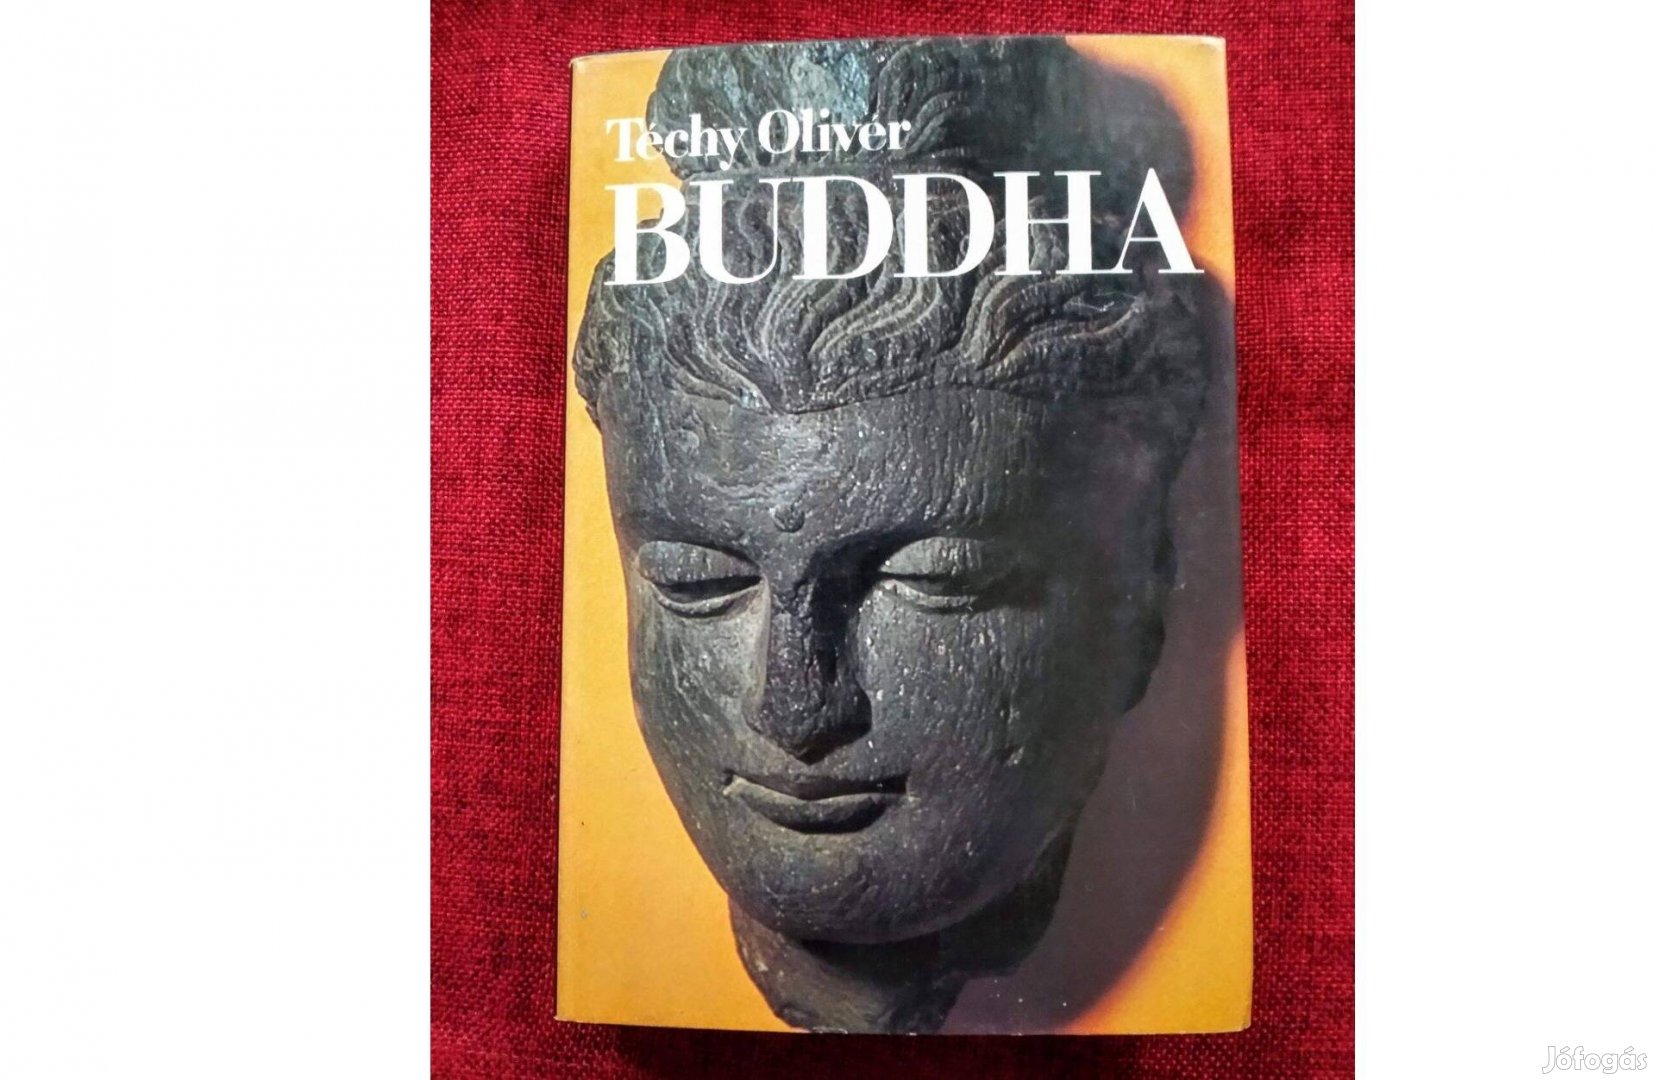 Techy Oliver Buddha